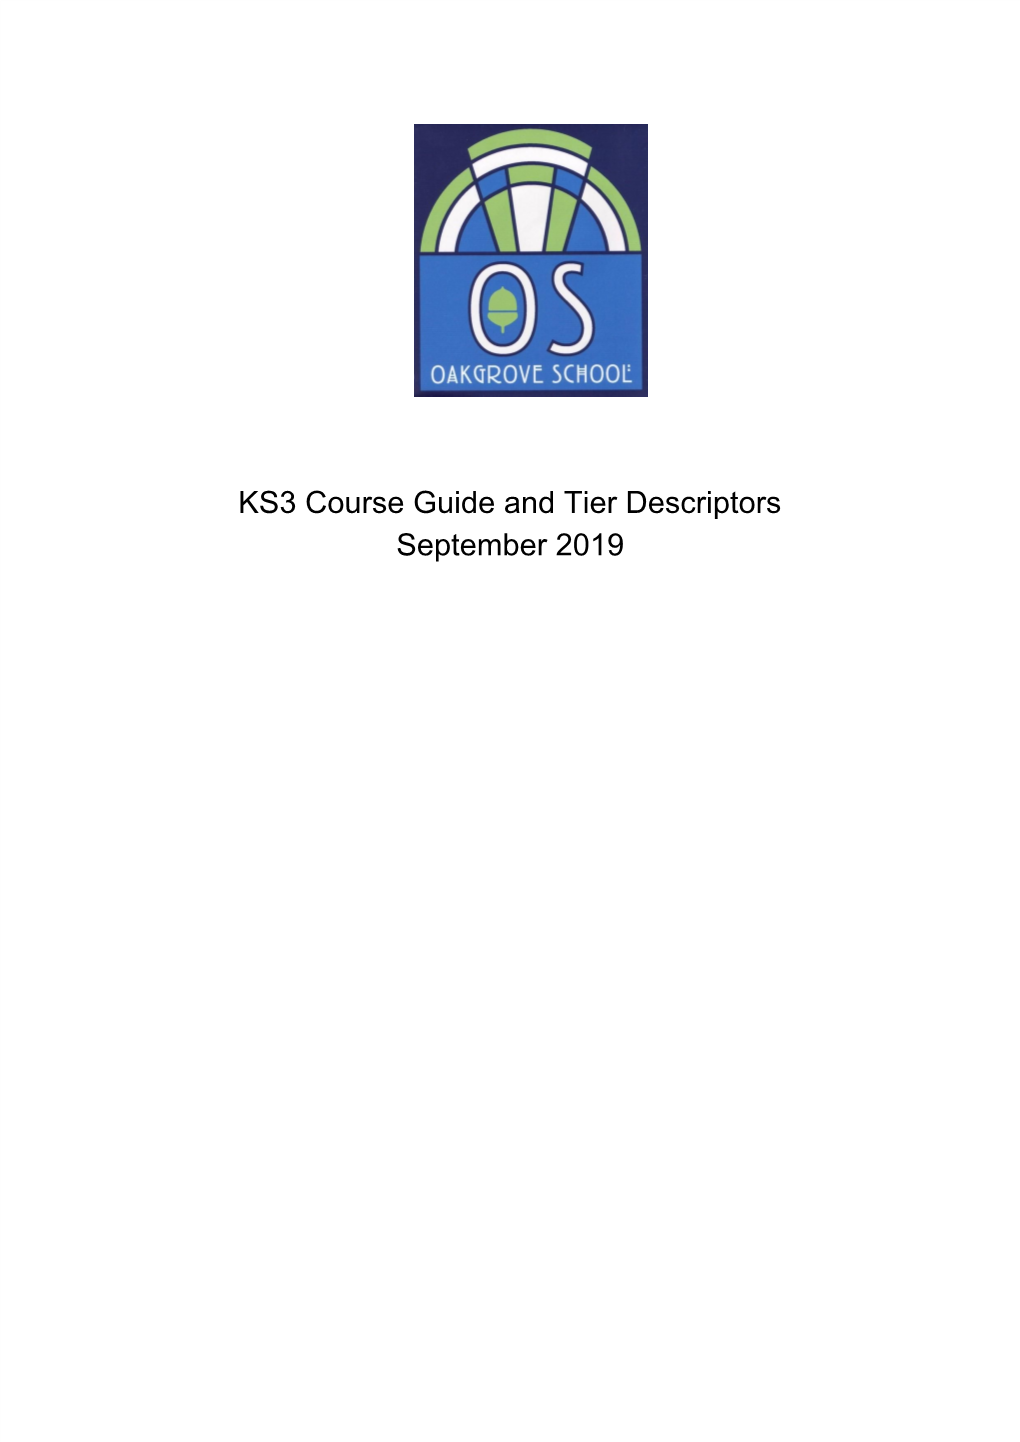 KS3 Course Guide and Tier Descriptors September 2019